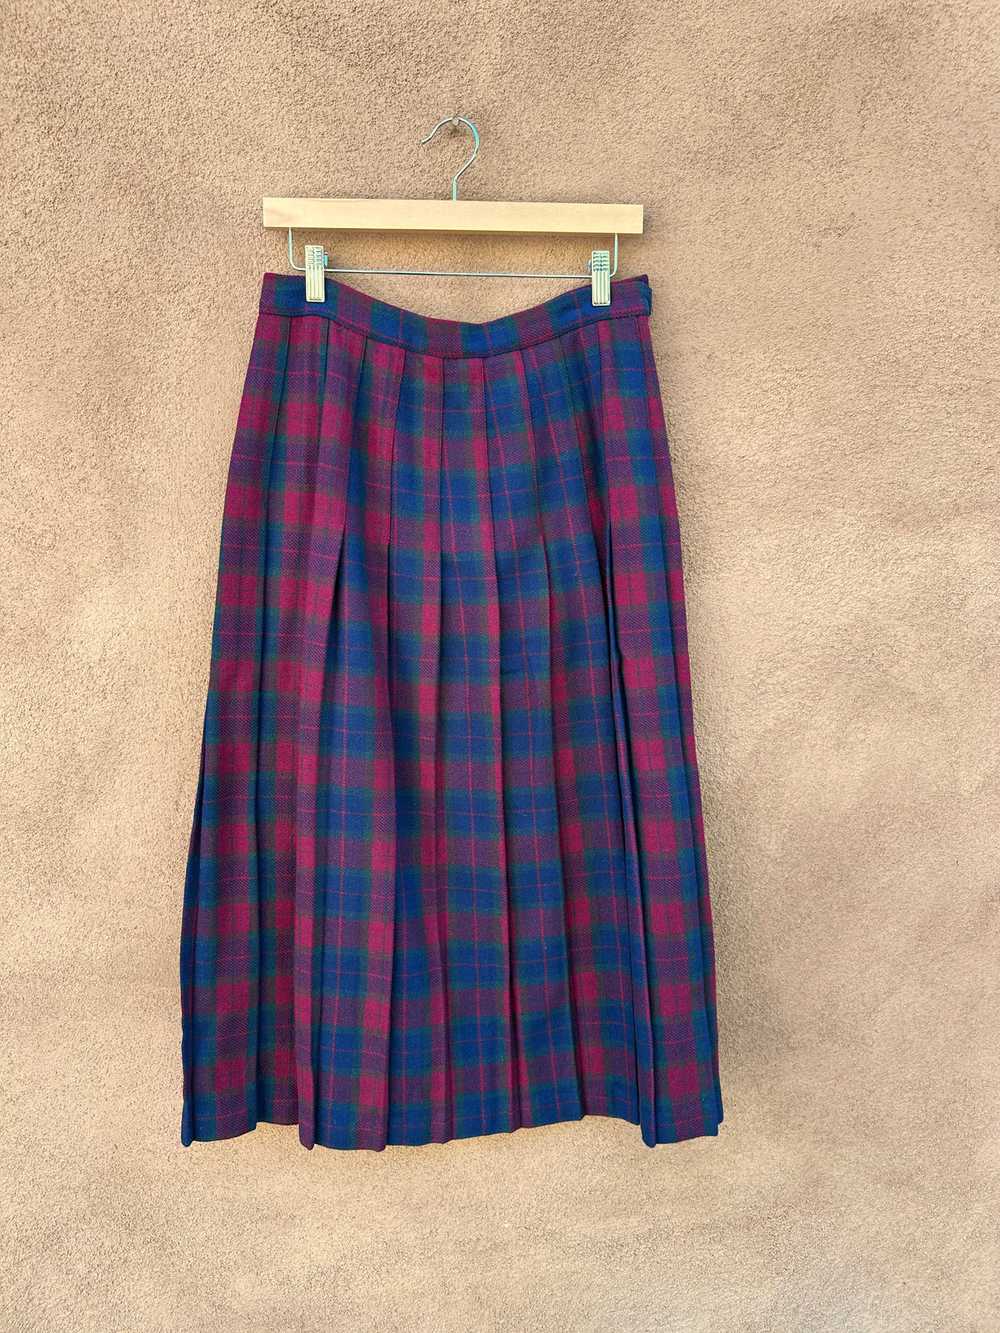 Wool Blend Skirt - Stephanie Andrews - 12 - image 3